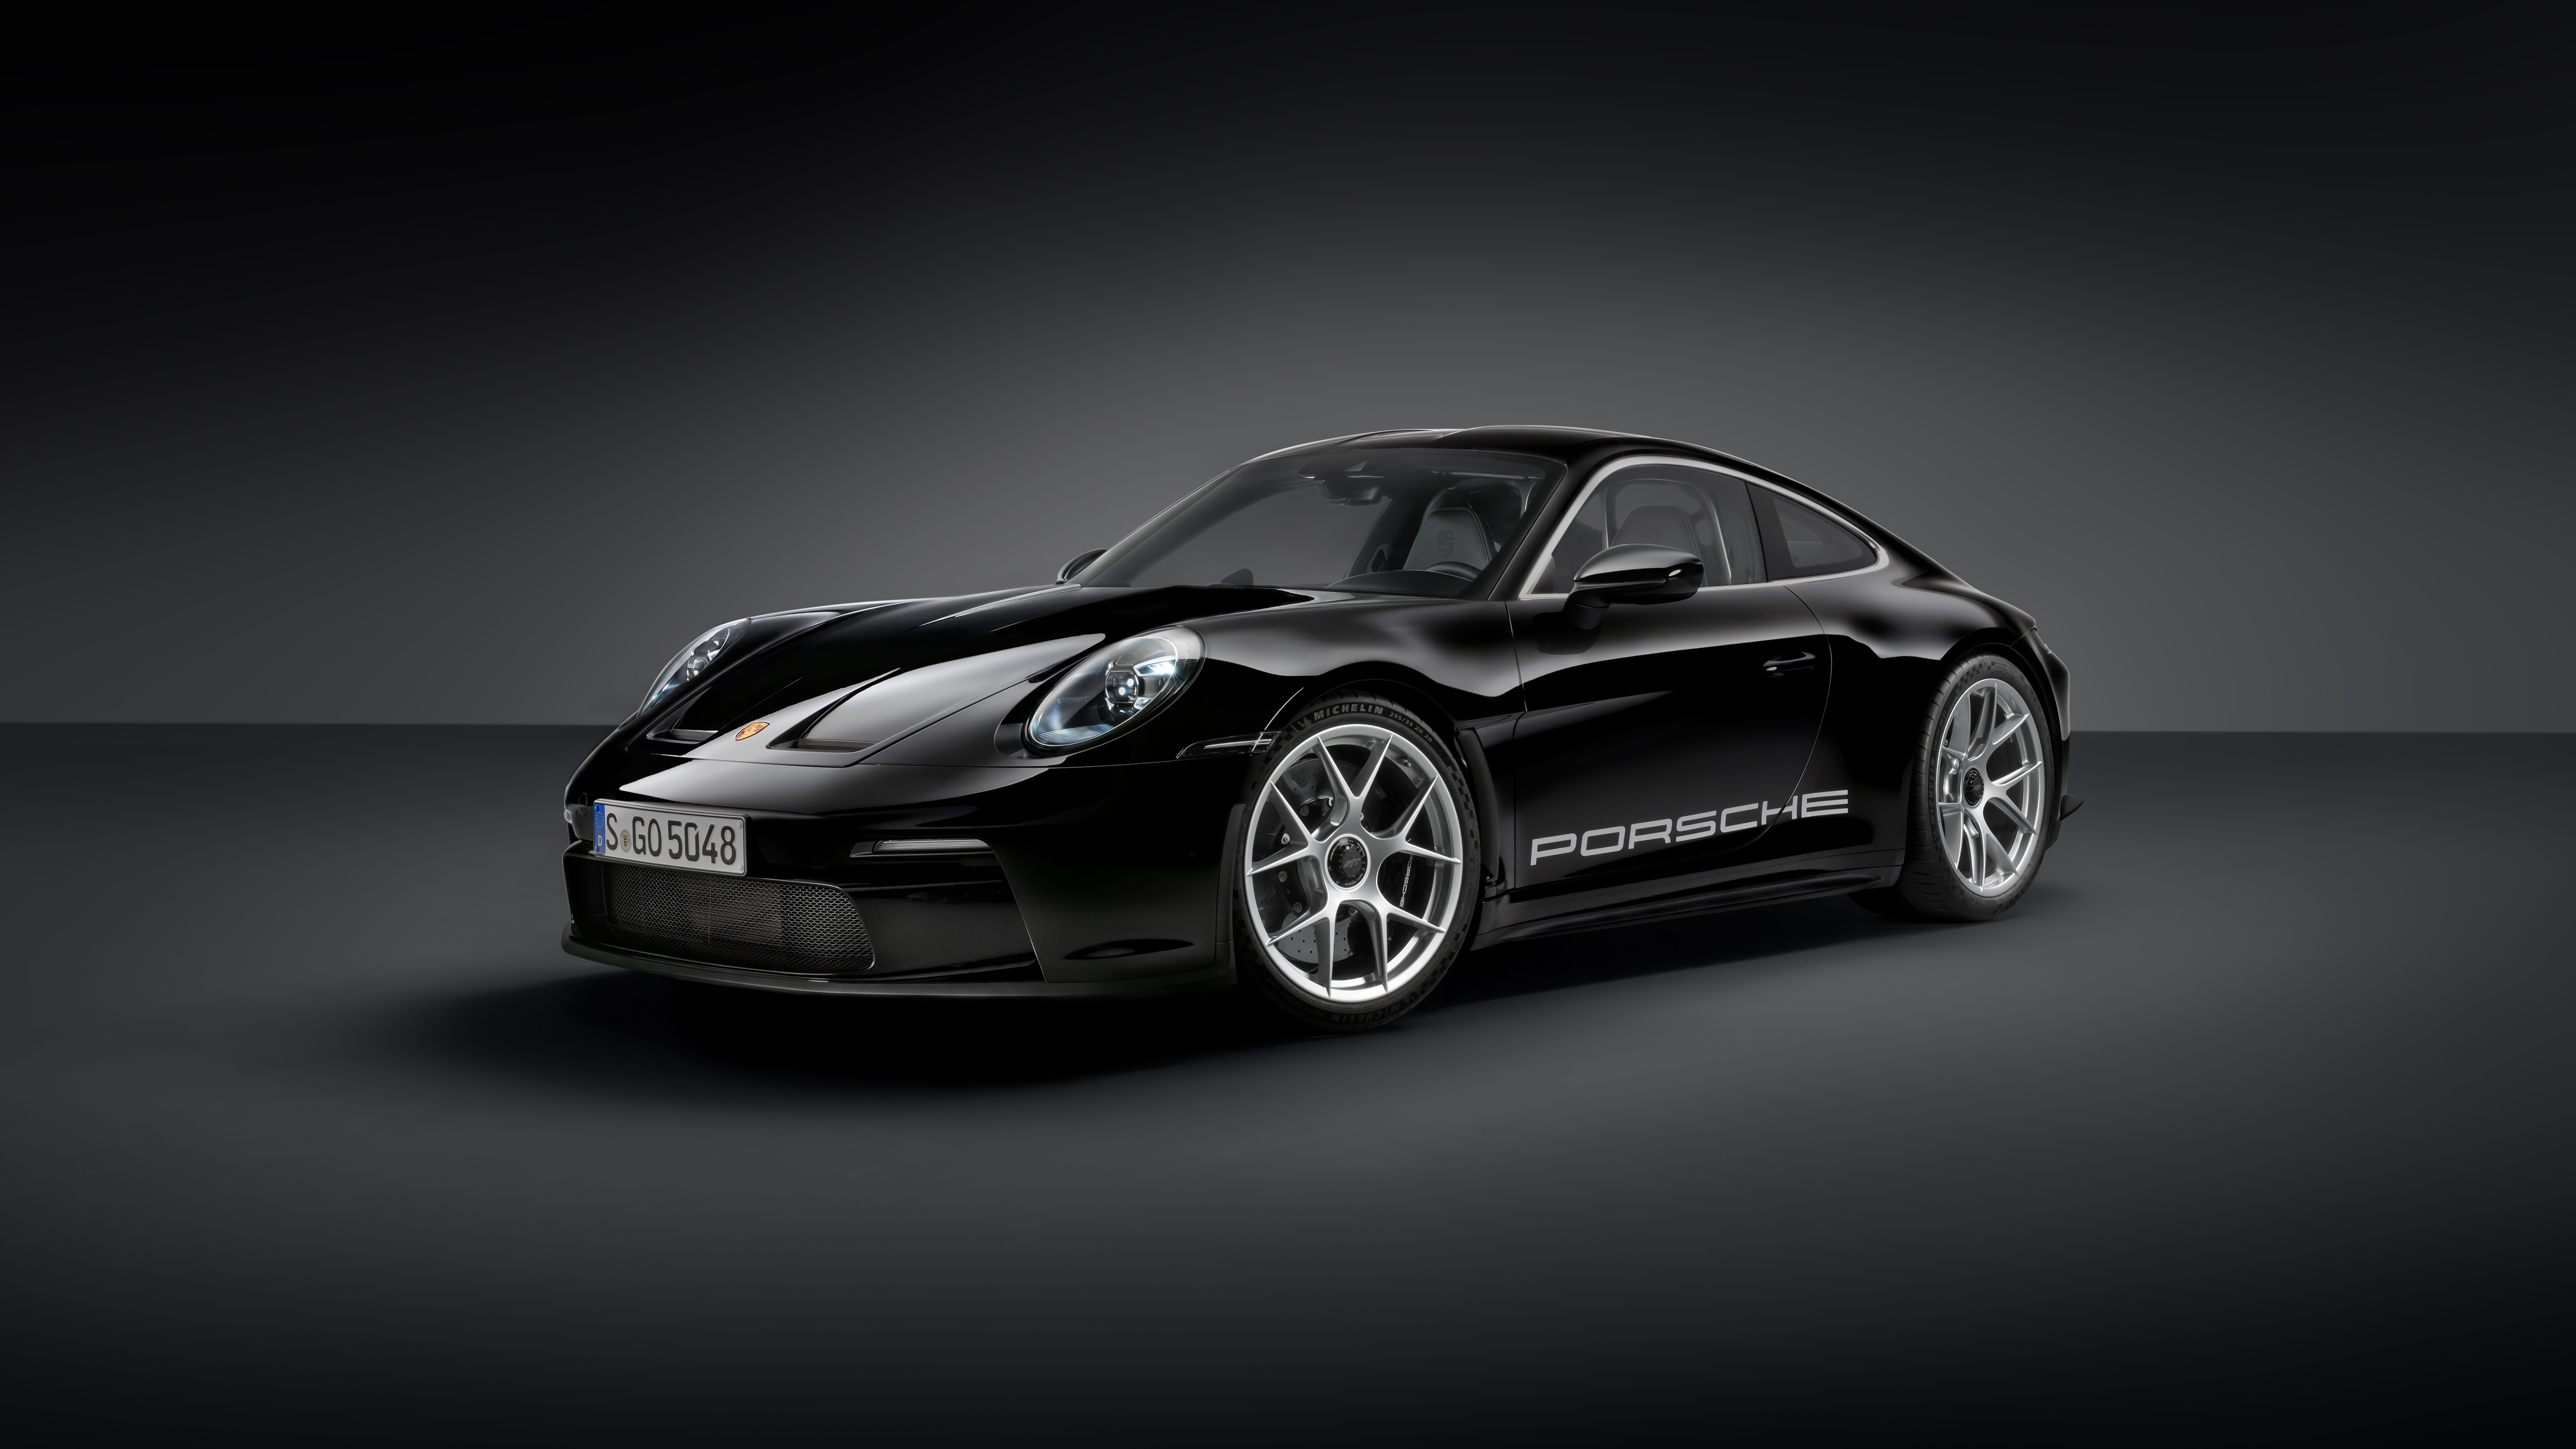 Porsche 911 Porsche Black Cars Car Sports Car German Cars Low Light 5120x2880